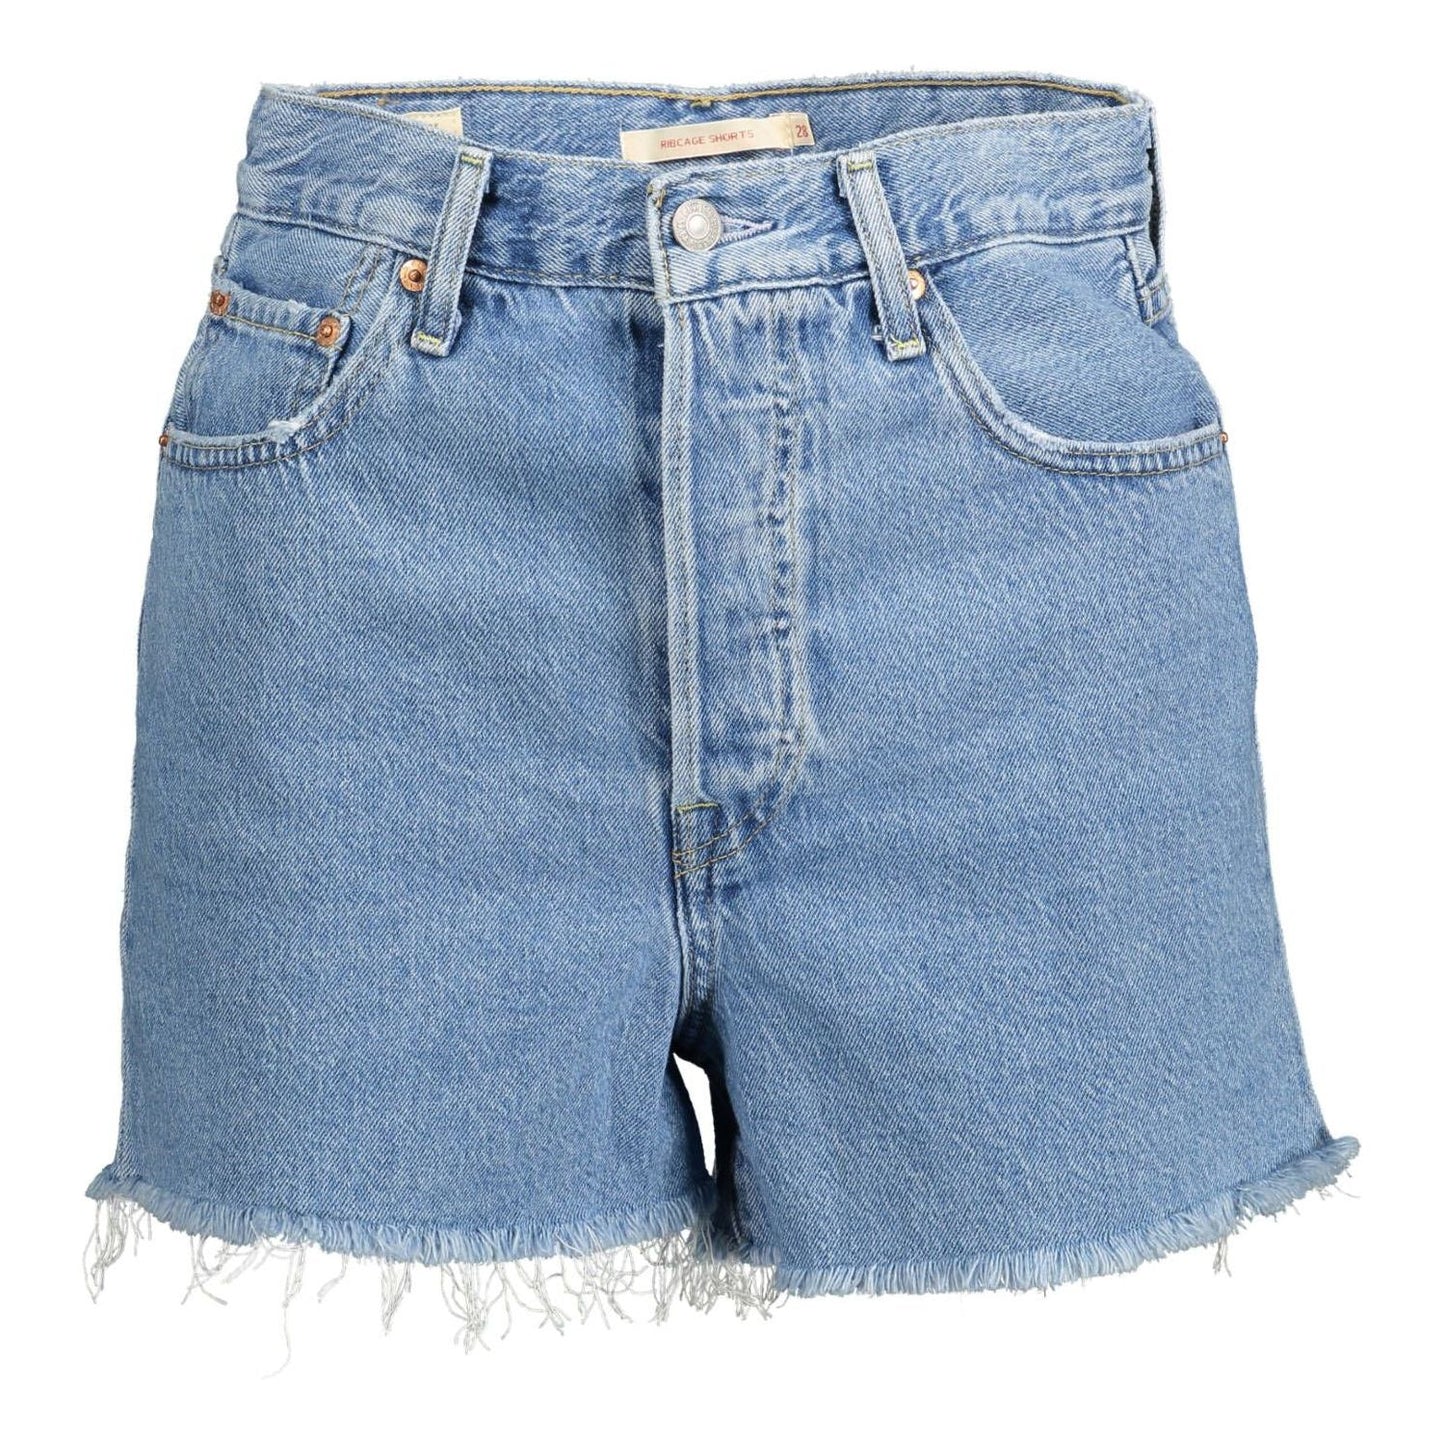 Levi's Chic Fringed Hem Denim Shorts in Light Blue chic-fringed-hem-denim-shorts-in-light-blue